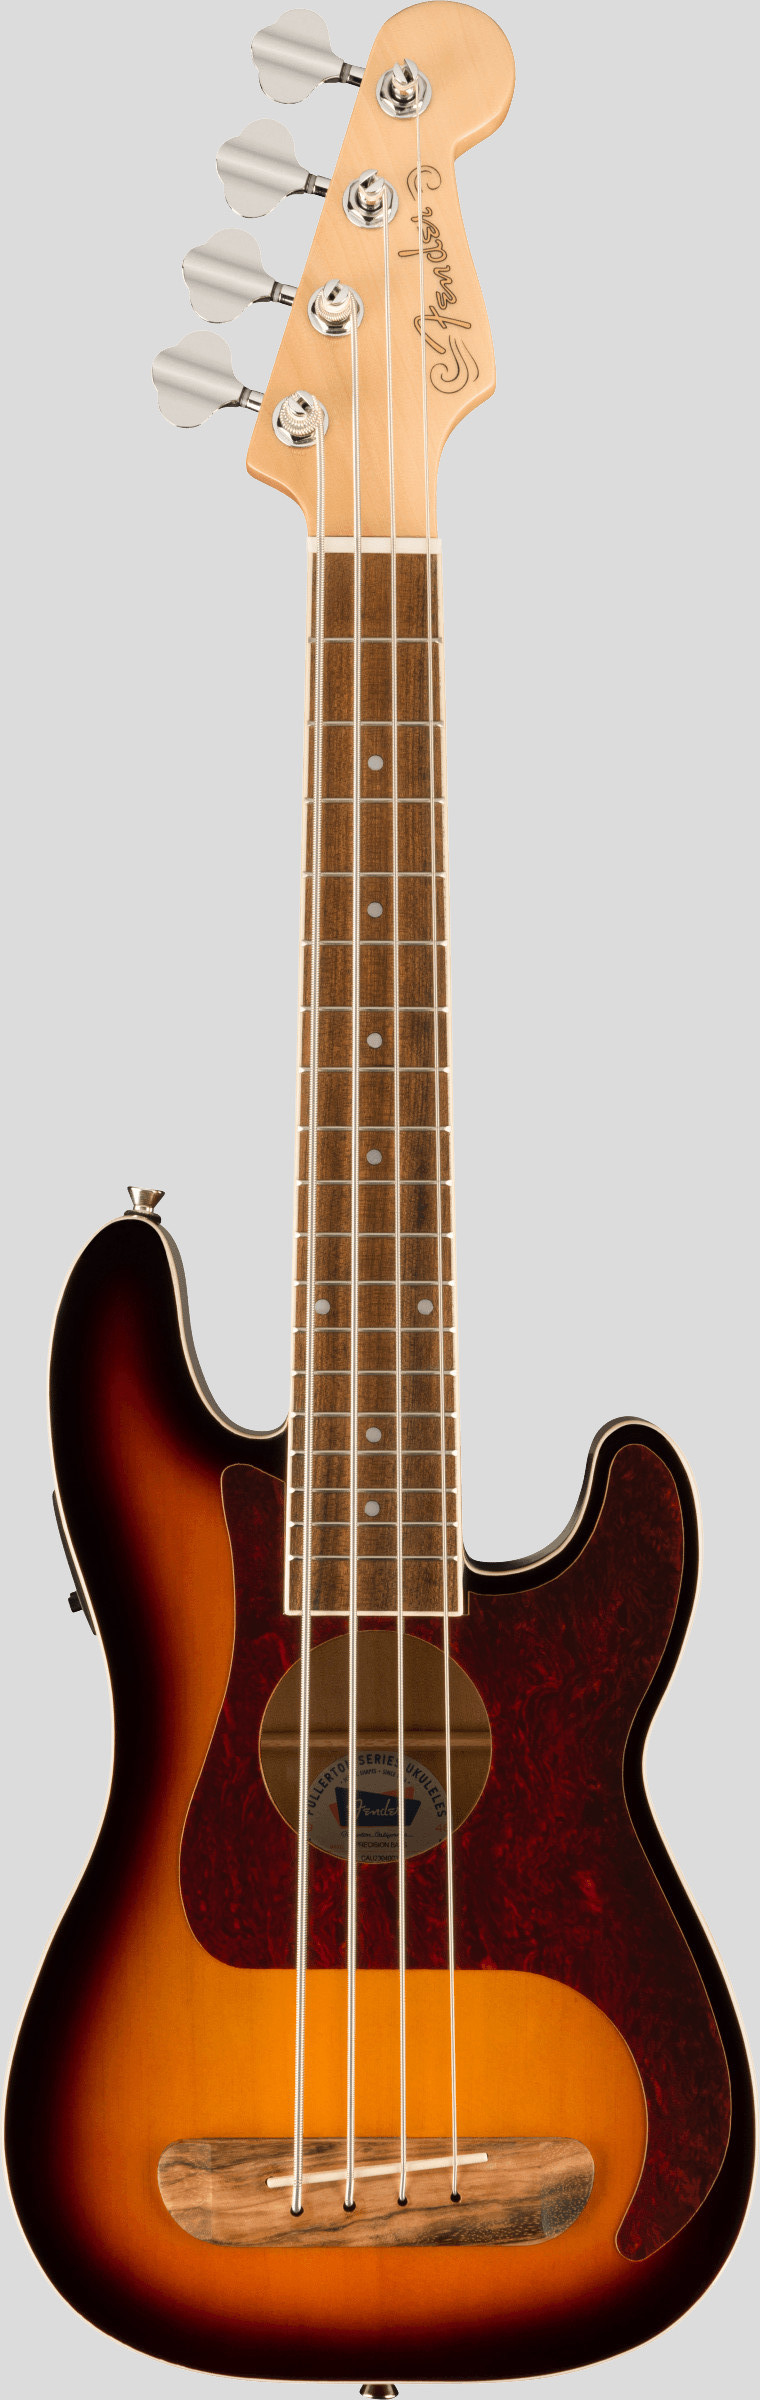 Fender Fullerton Precision Bass Ukulele 3-Color Sunburst 1